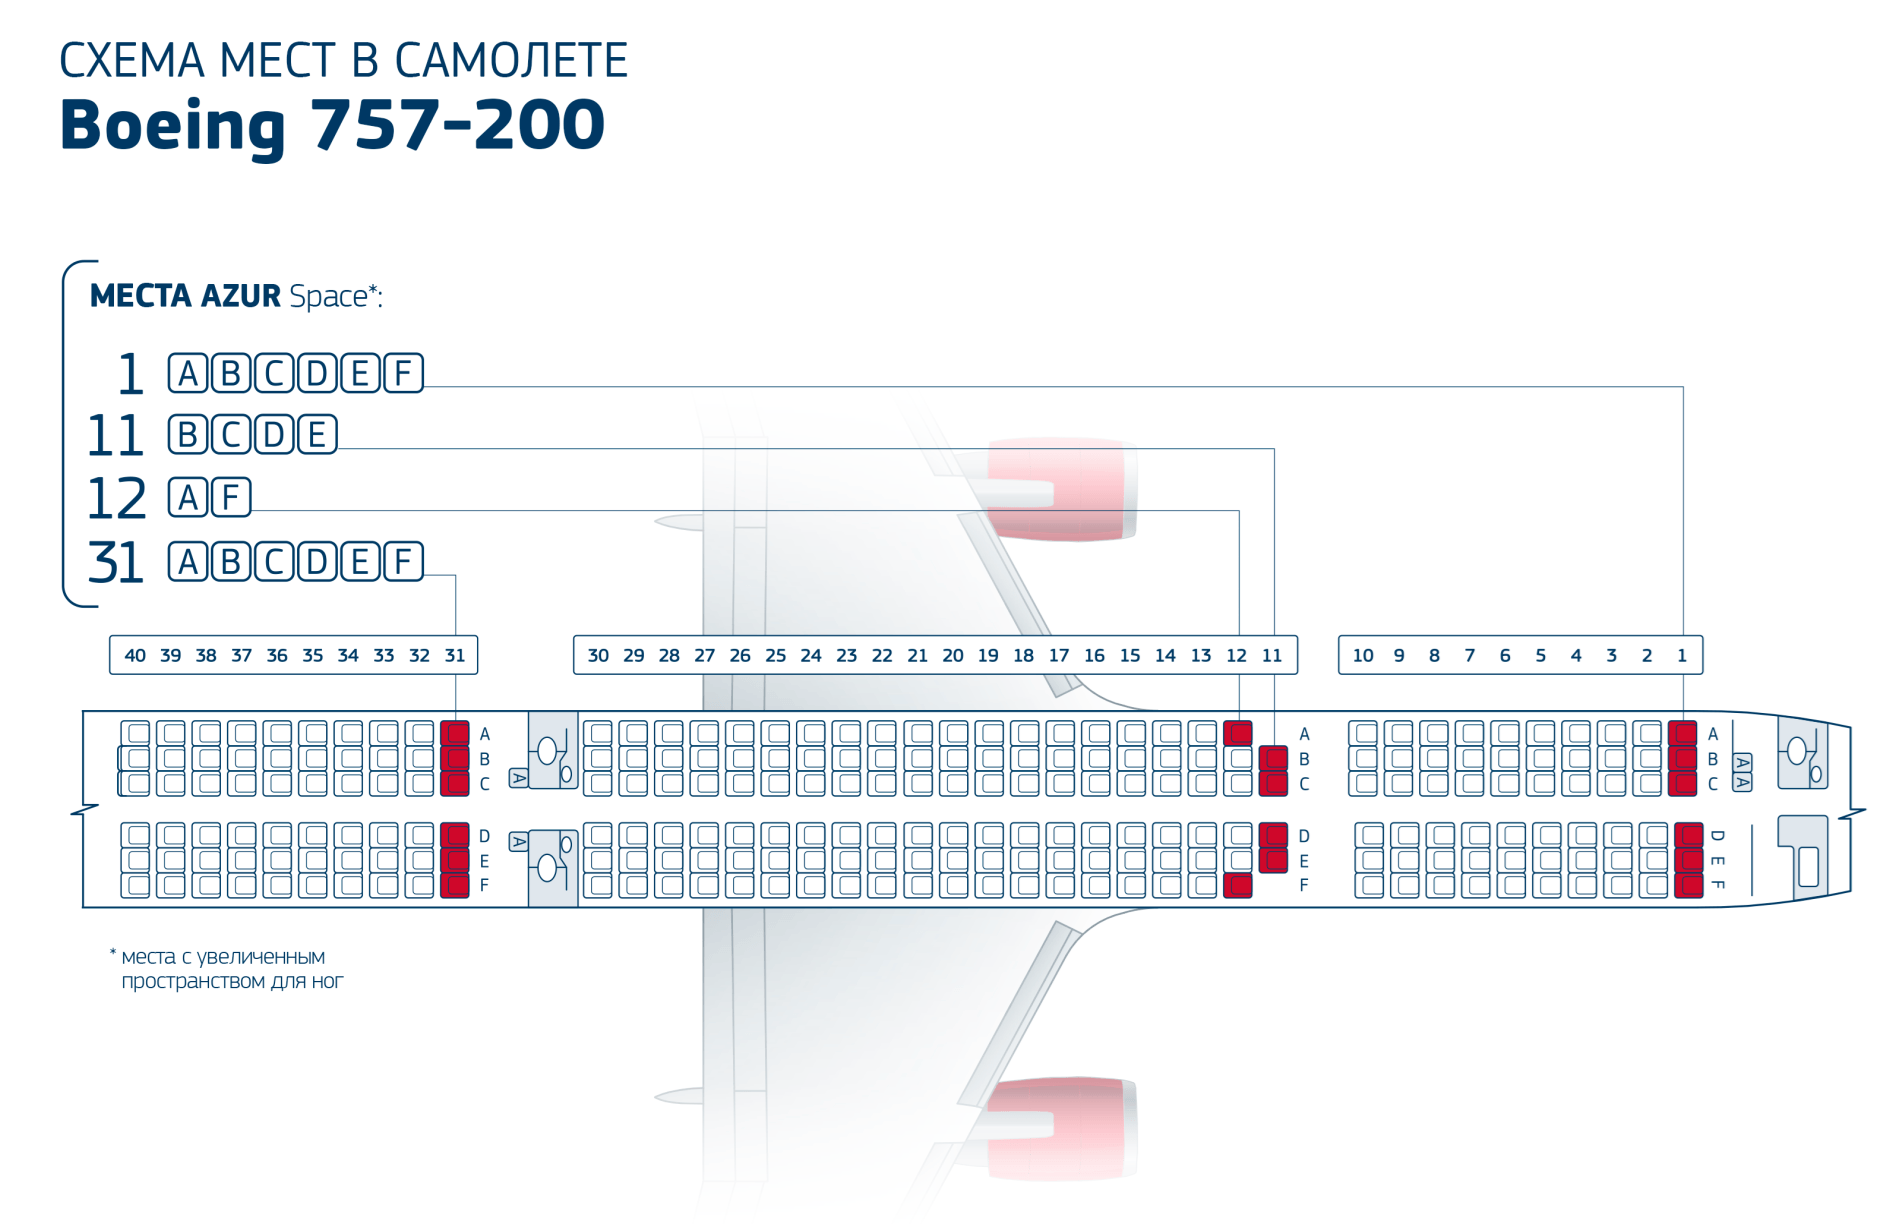 Боинг 757-200: схема салона, лучшие места